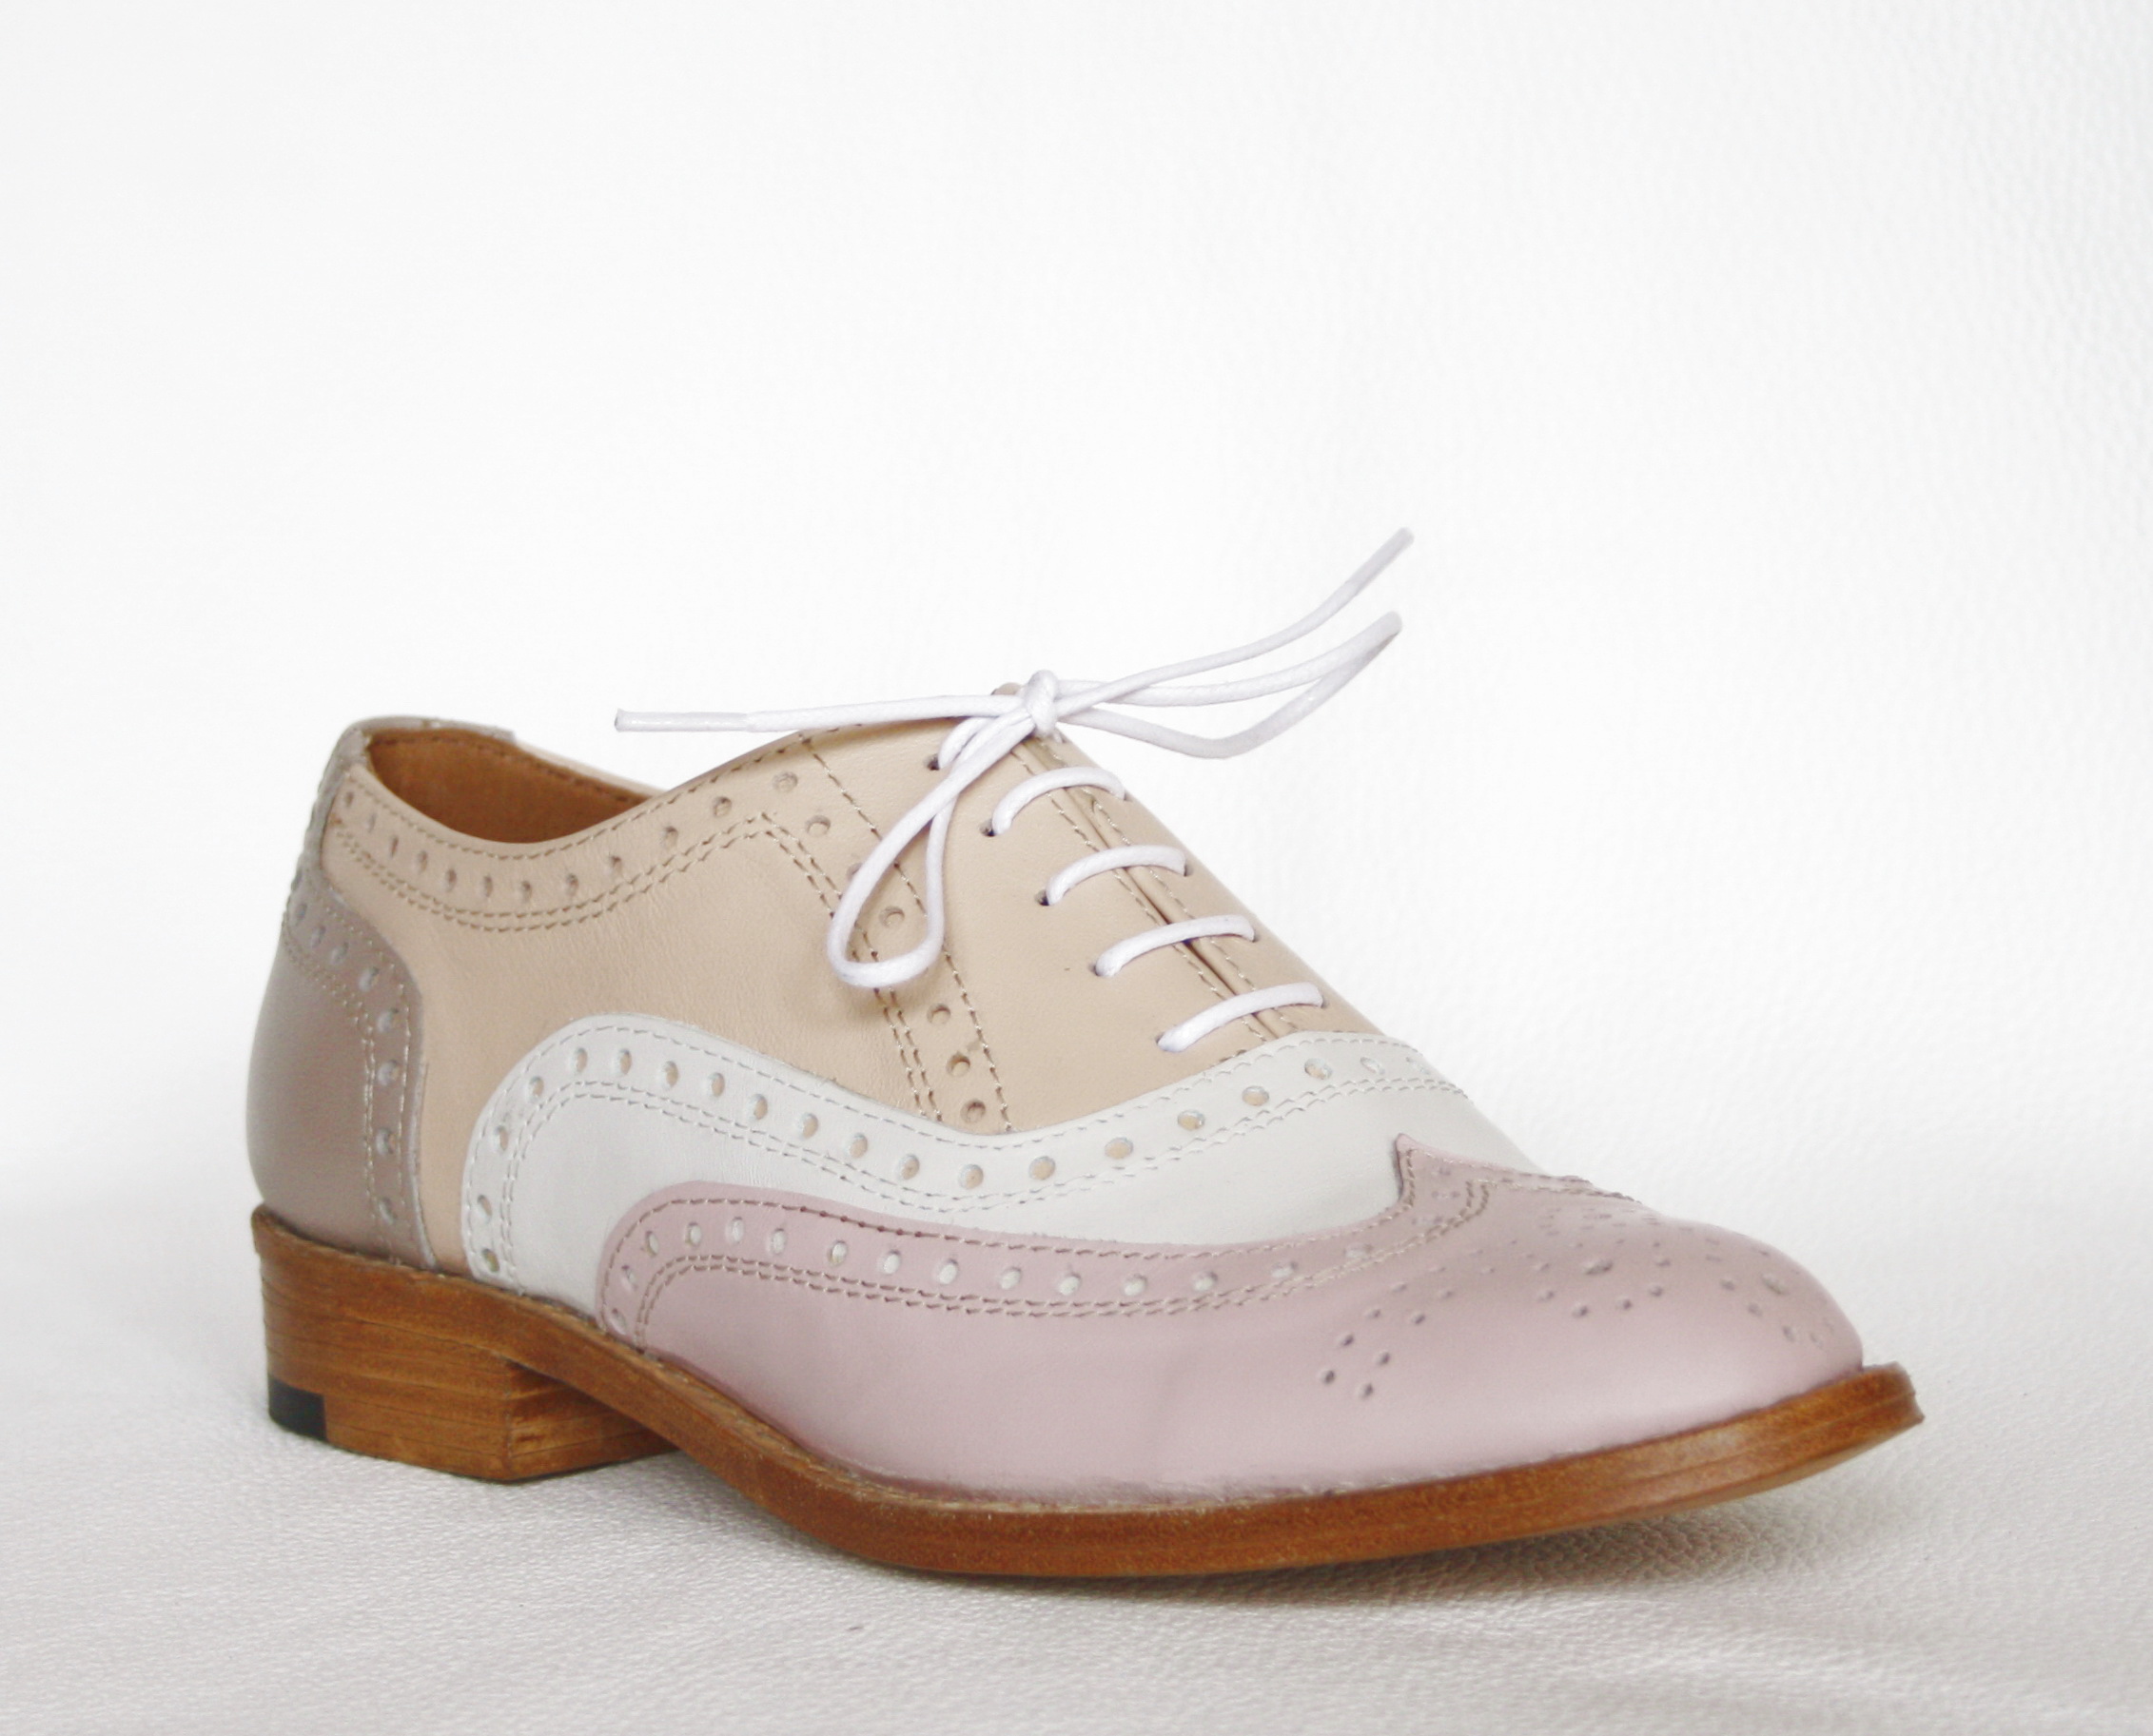 Oxford shoes K901/K pink white cream 